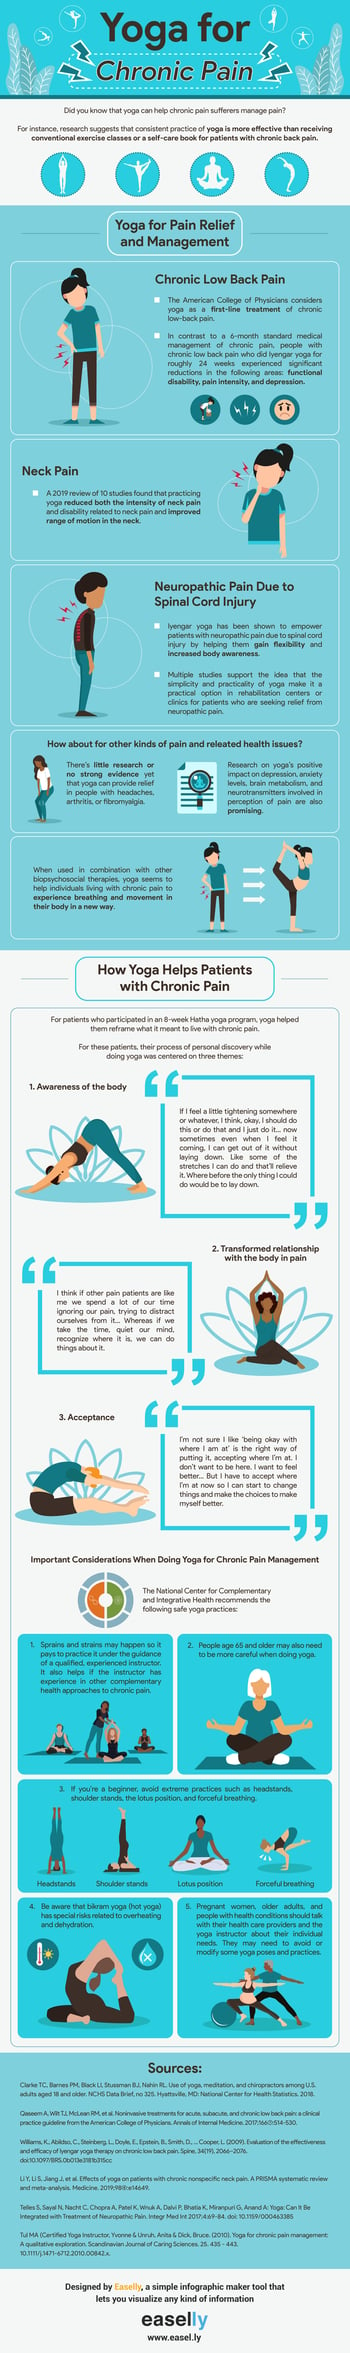 yoga for chronic pain infographic